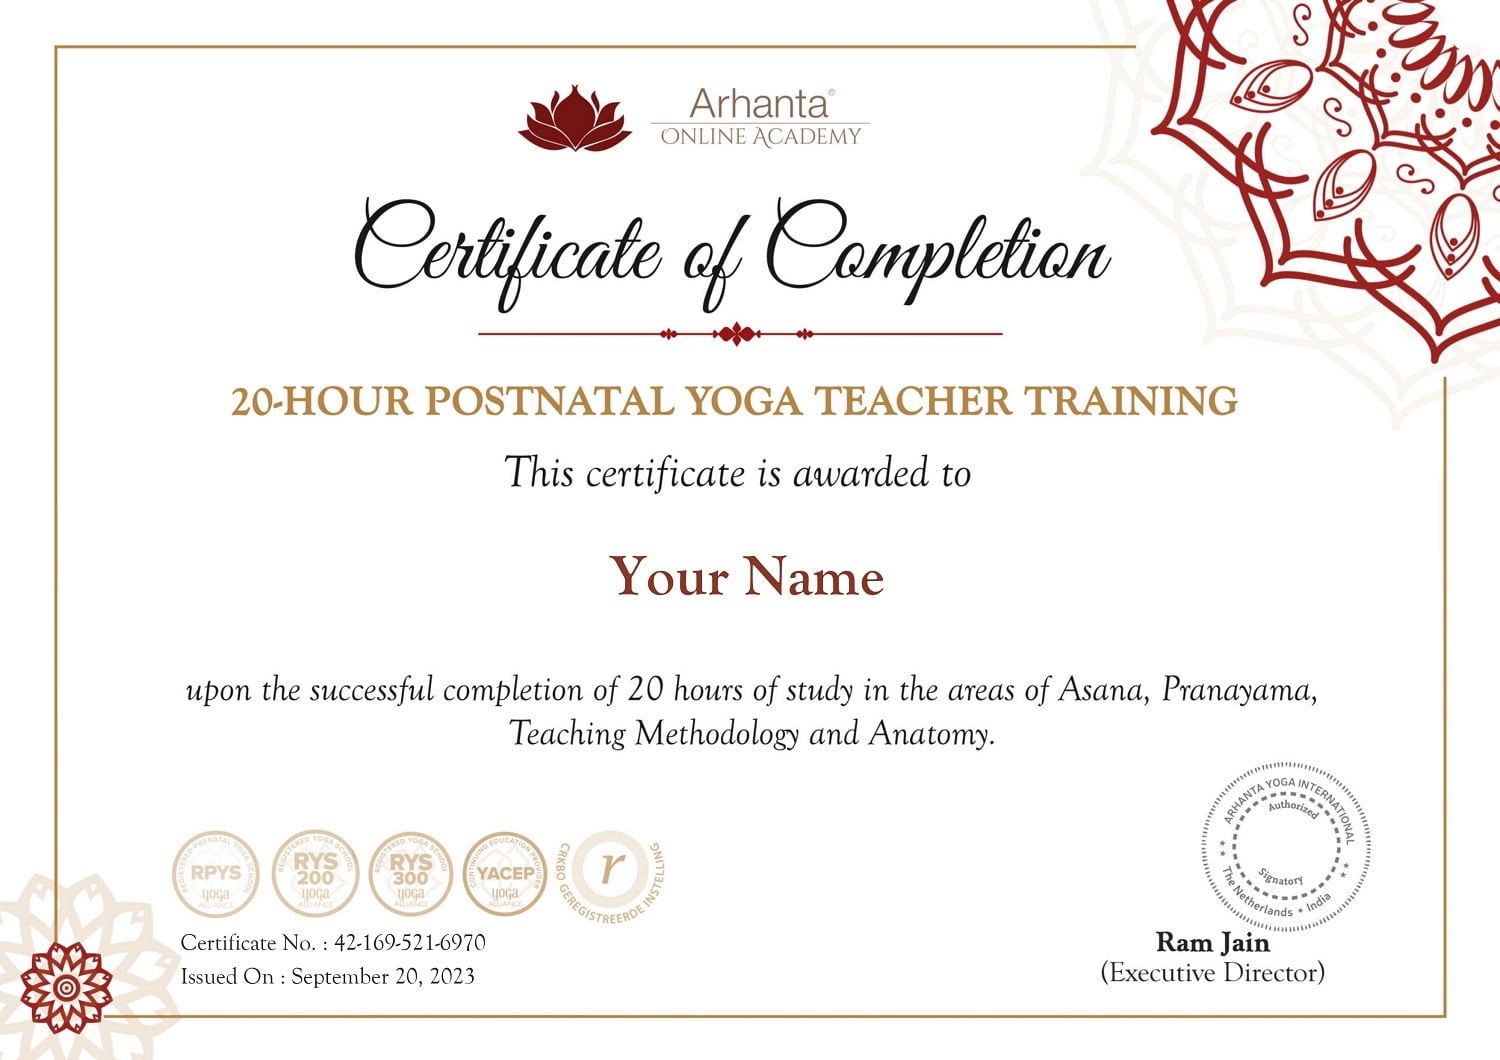 Certificat-de-formation-de-professeur-de-yoga-postnatal-en-ligne-de-20-heures